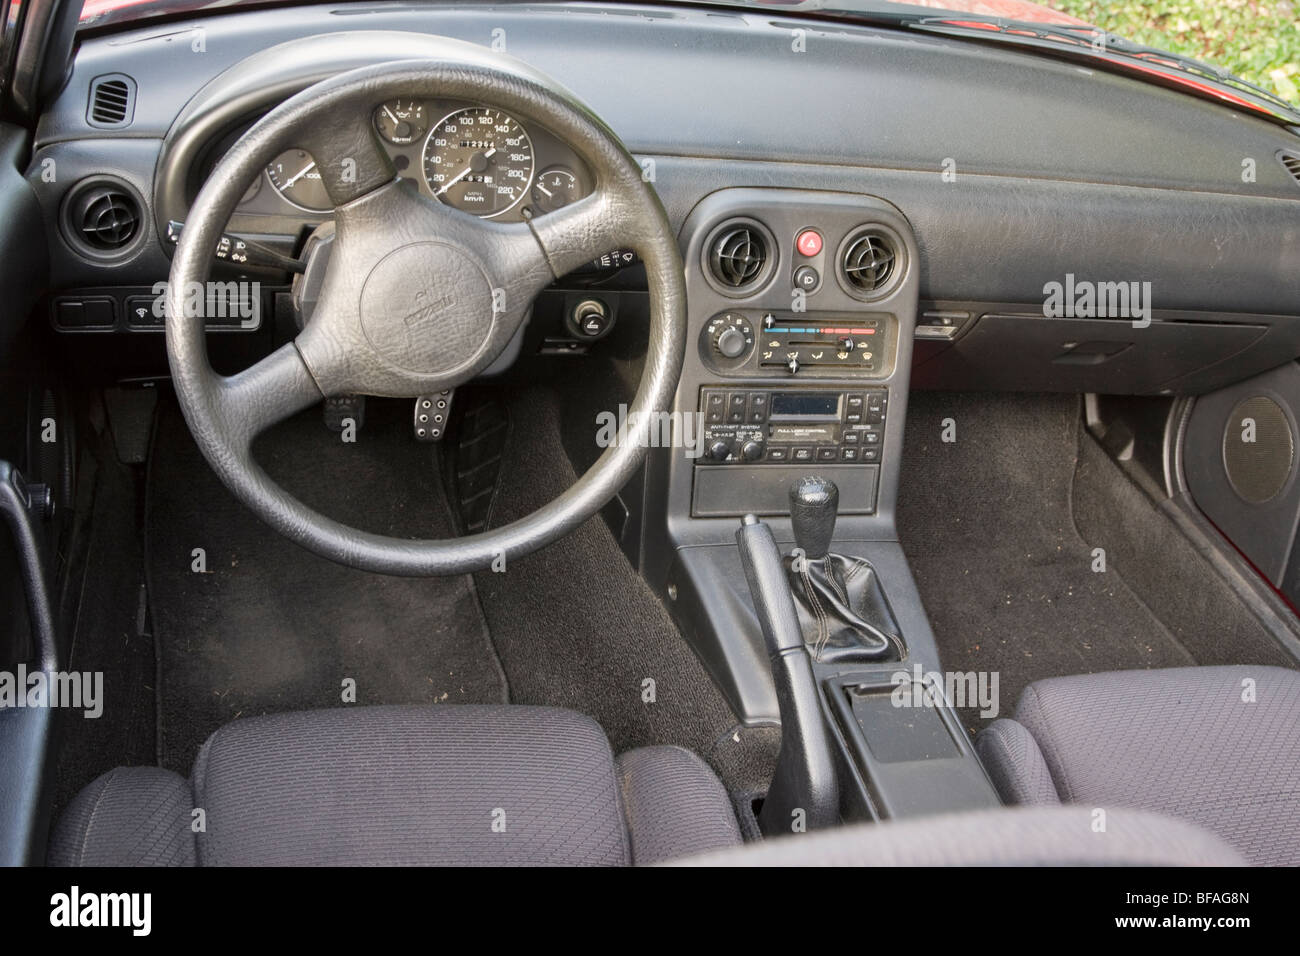 Mazda Mx 5 Miata Interior Stock Photo 26662517 Alamy